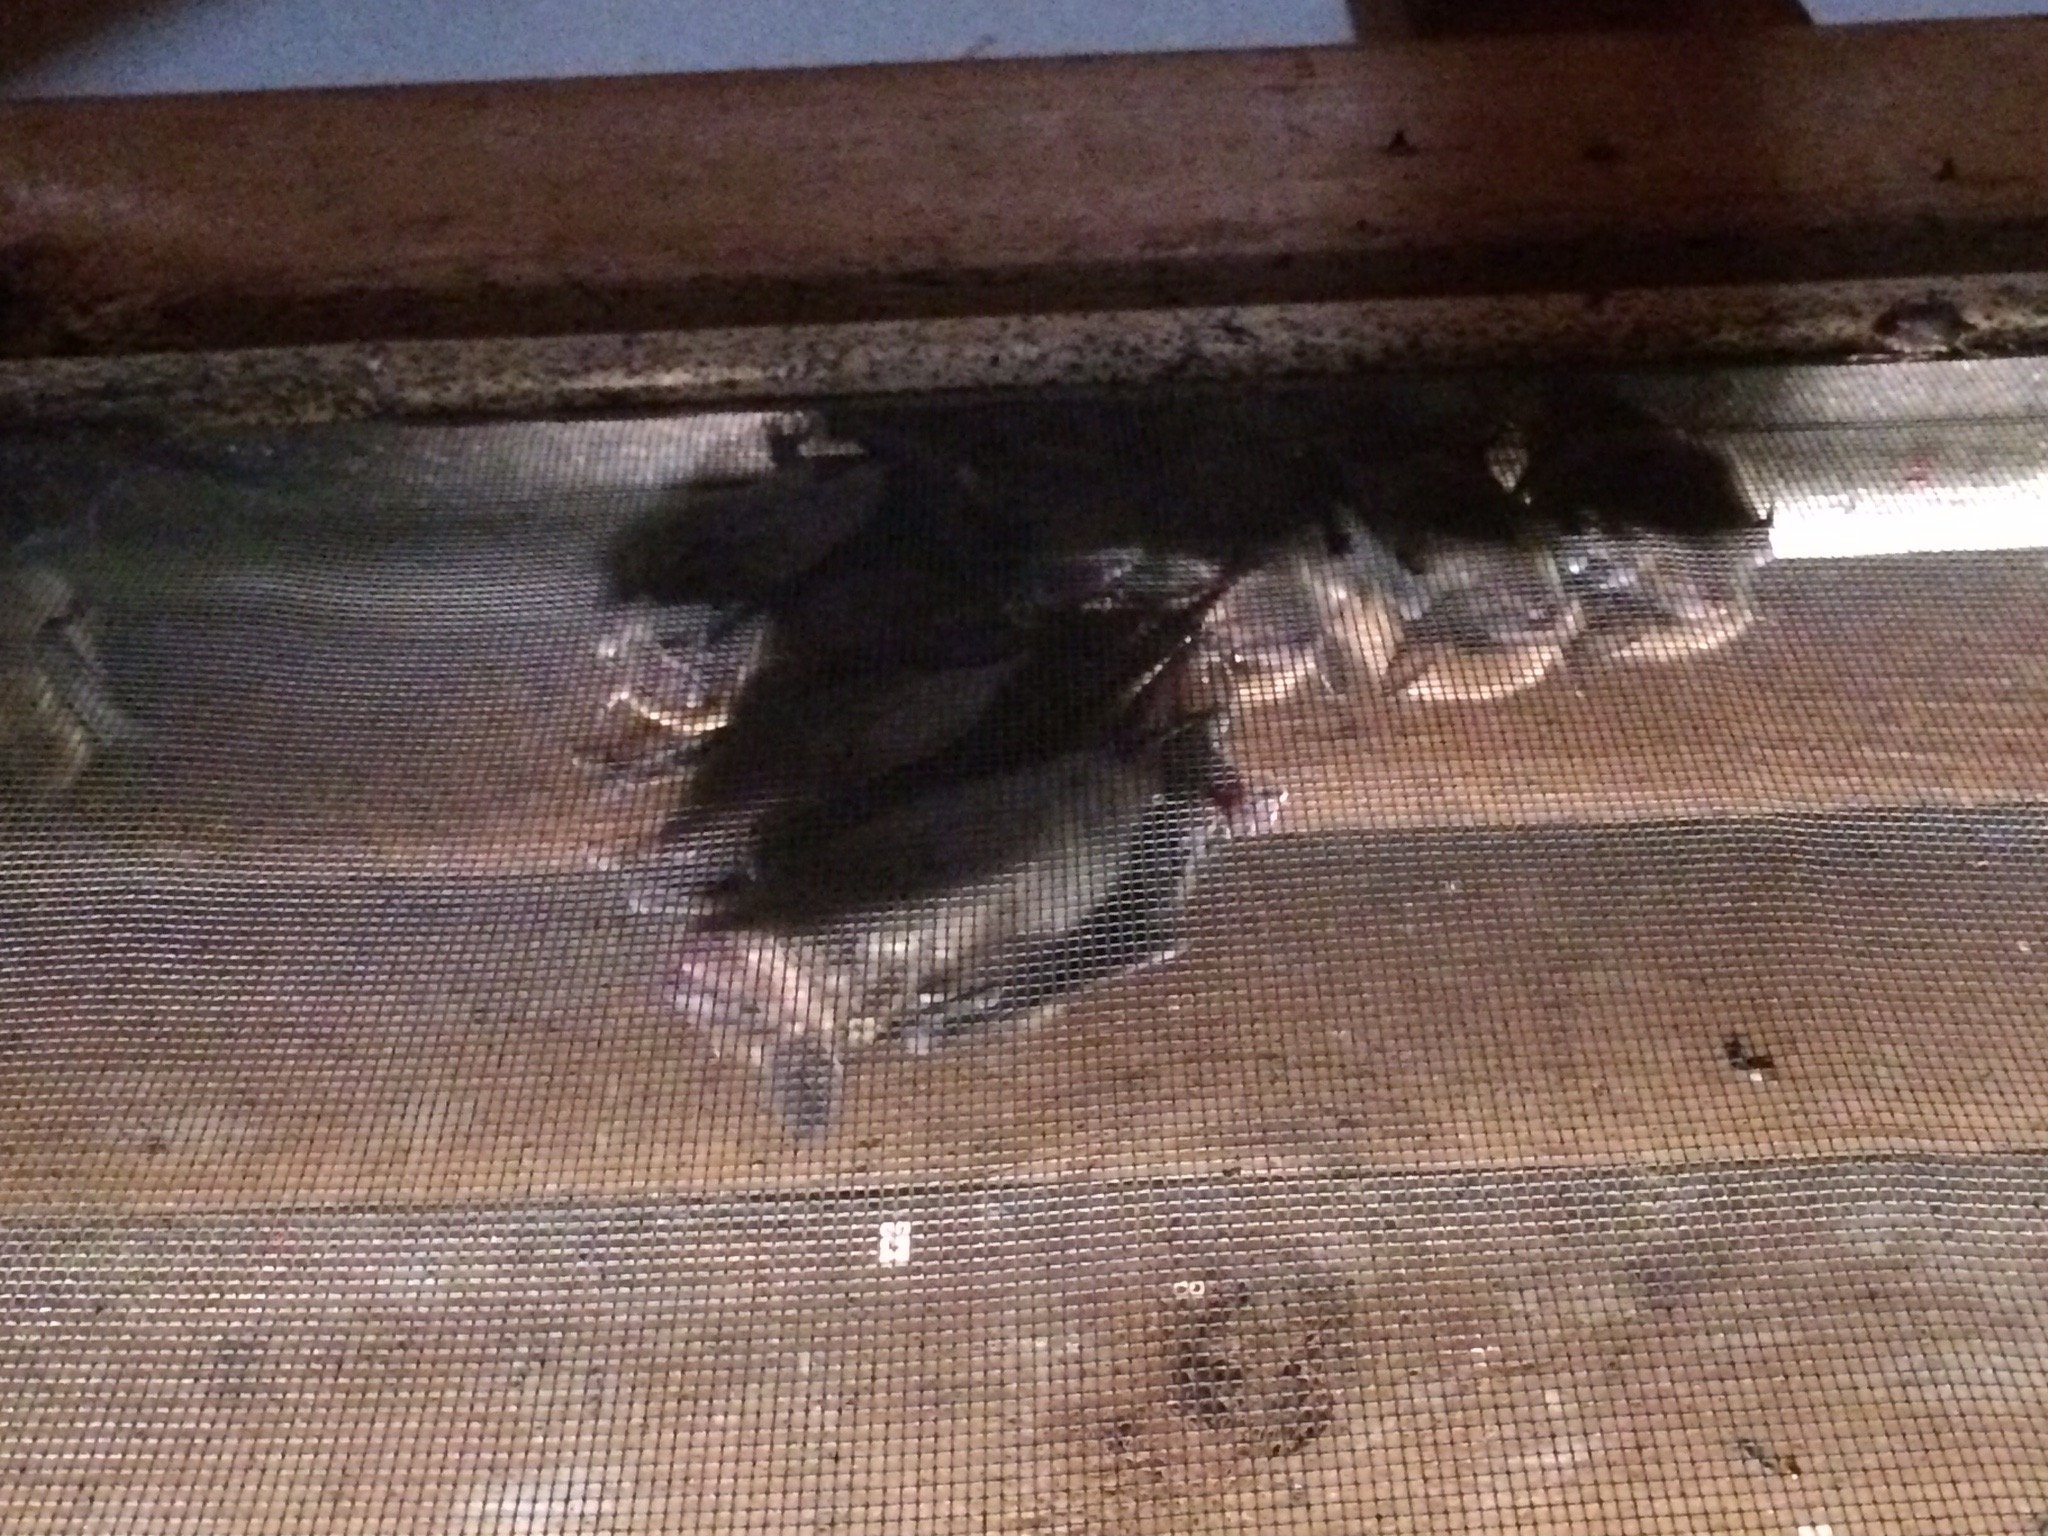 bats in attic